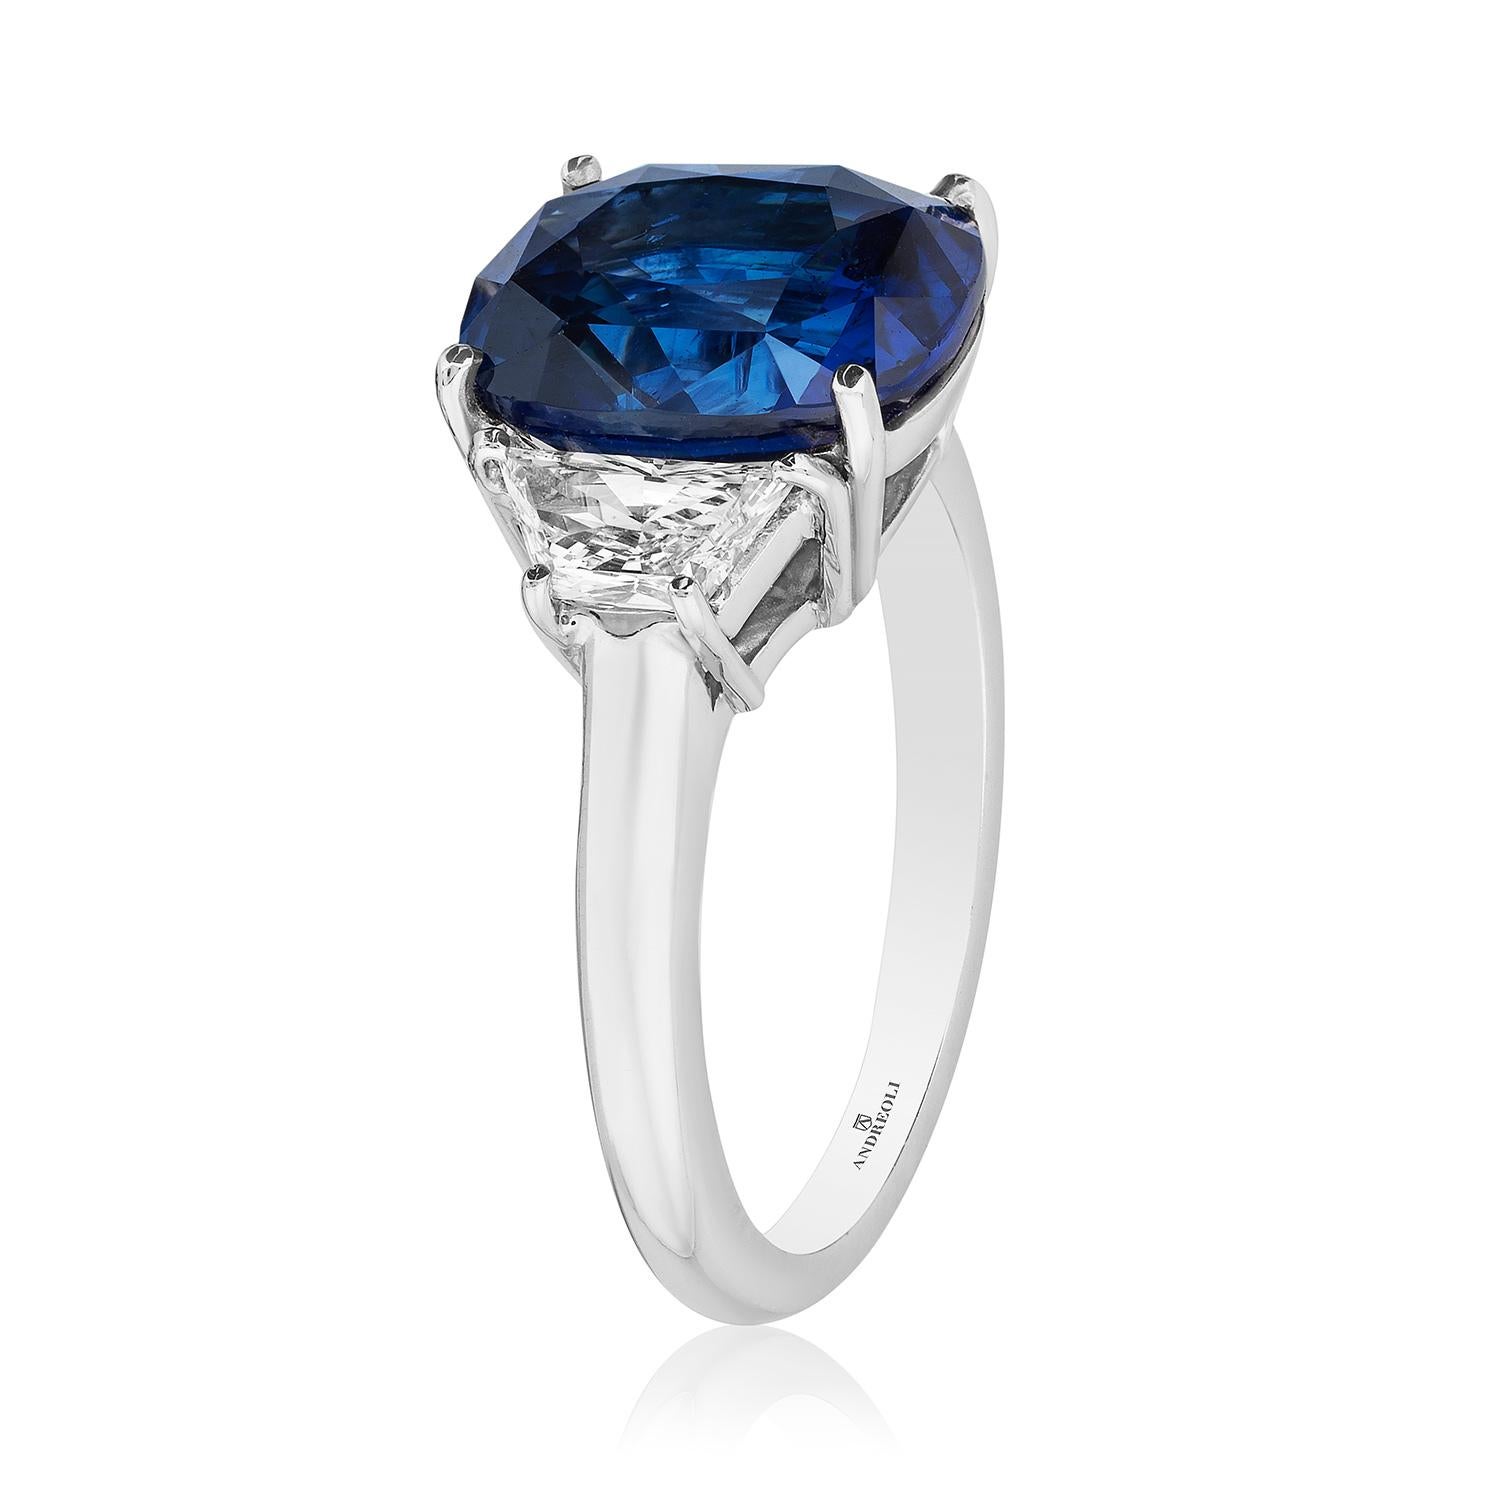 Blue Sapphire Sri Lanka Ceylon Three Stone Engagement Ring Andreoli Certified

This Andreoli blue sapphire ring is certified by the prestigious GRS Switzerland laboratory. 

Features a 5.64 carat Sri Lanka Ceylon Blue Sapphire flanked by two